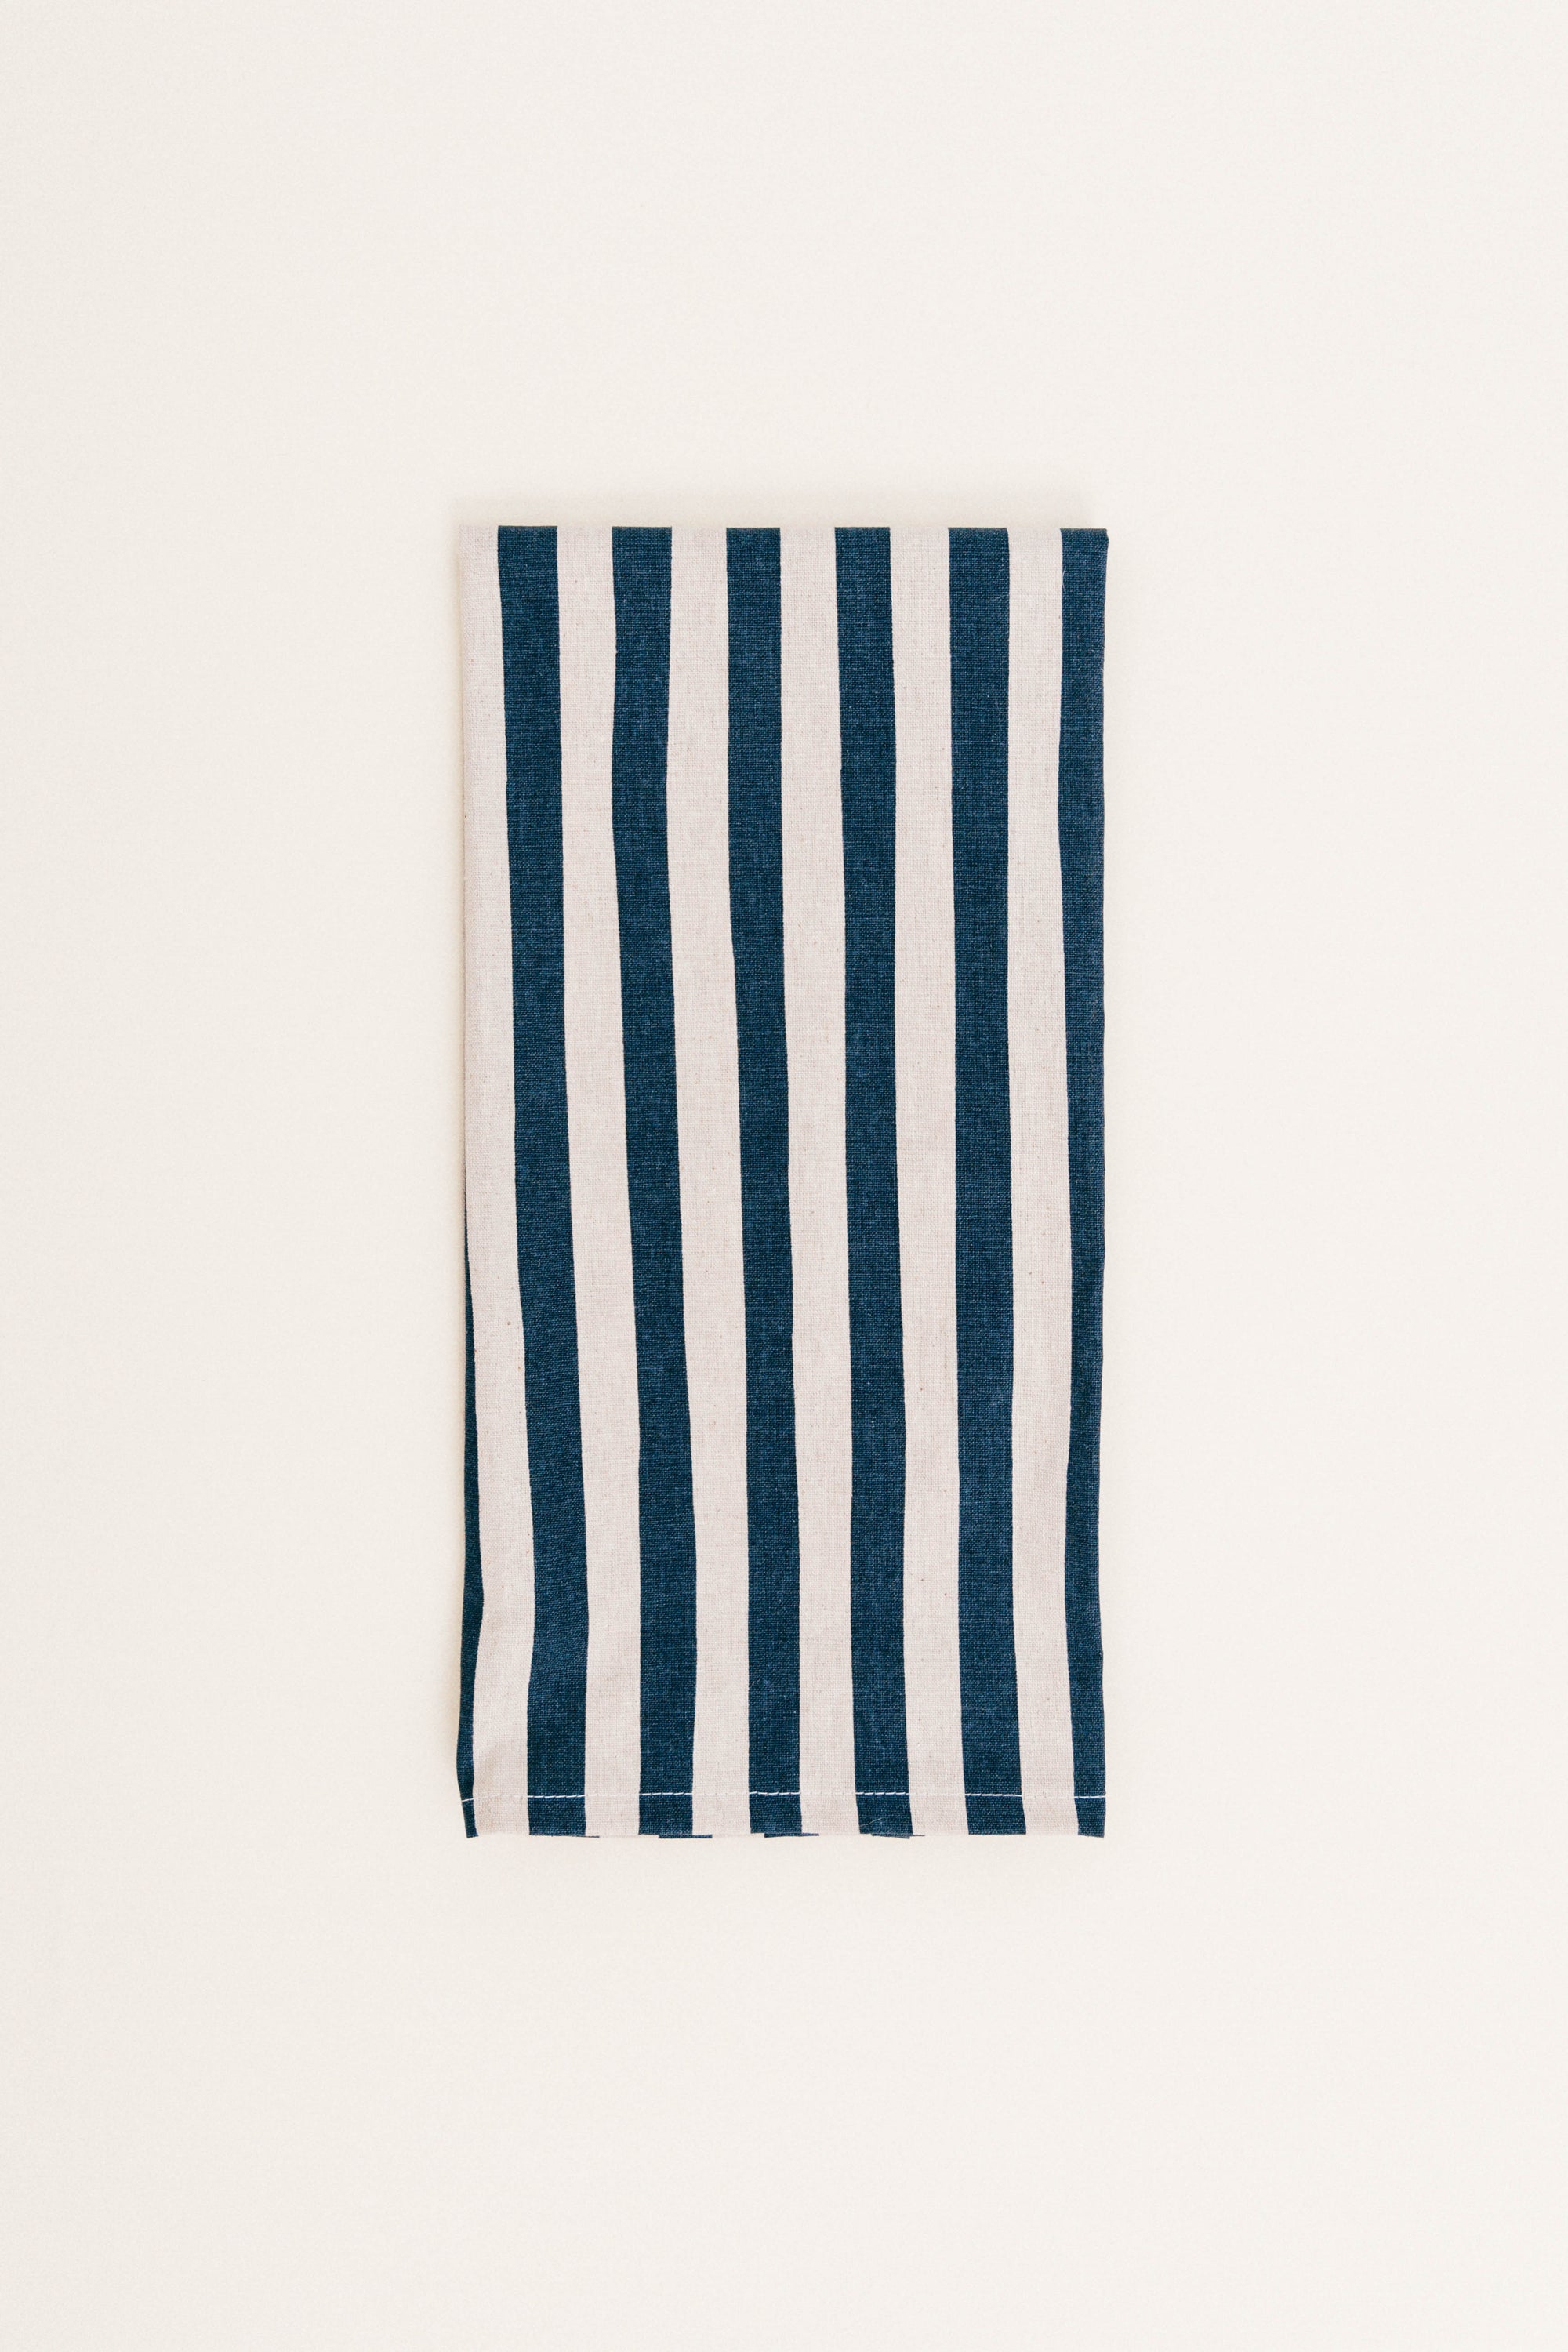 Modern Print Dish Towel Navy Stripe